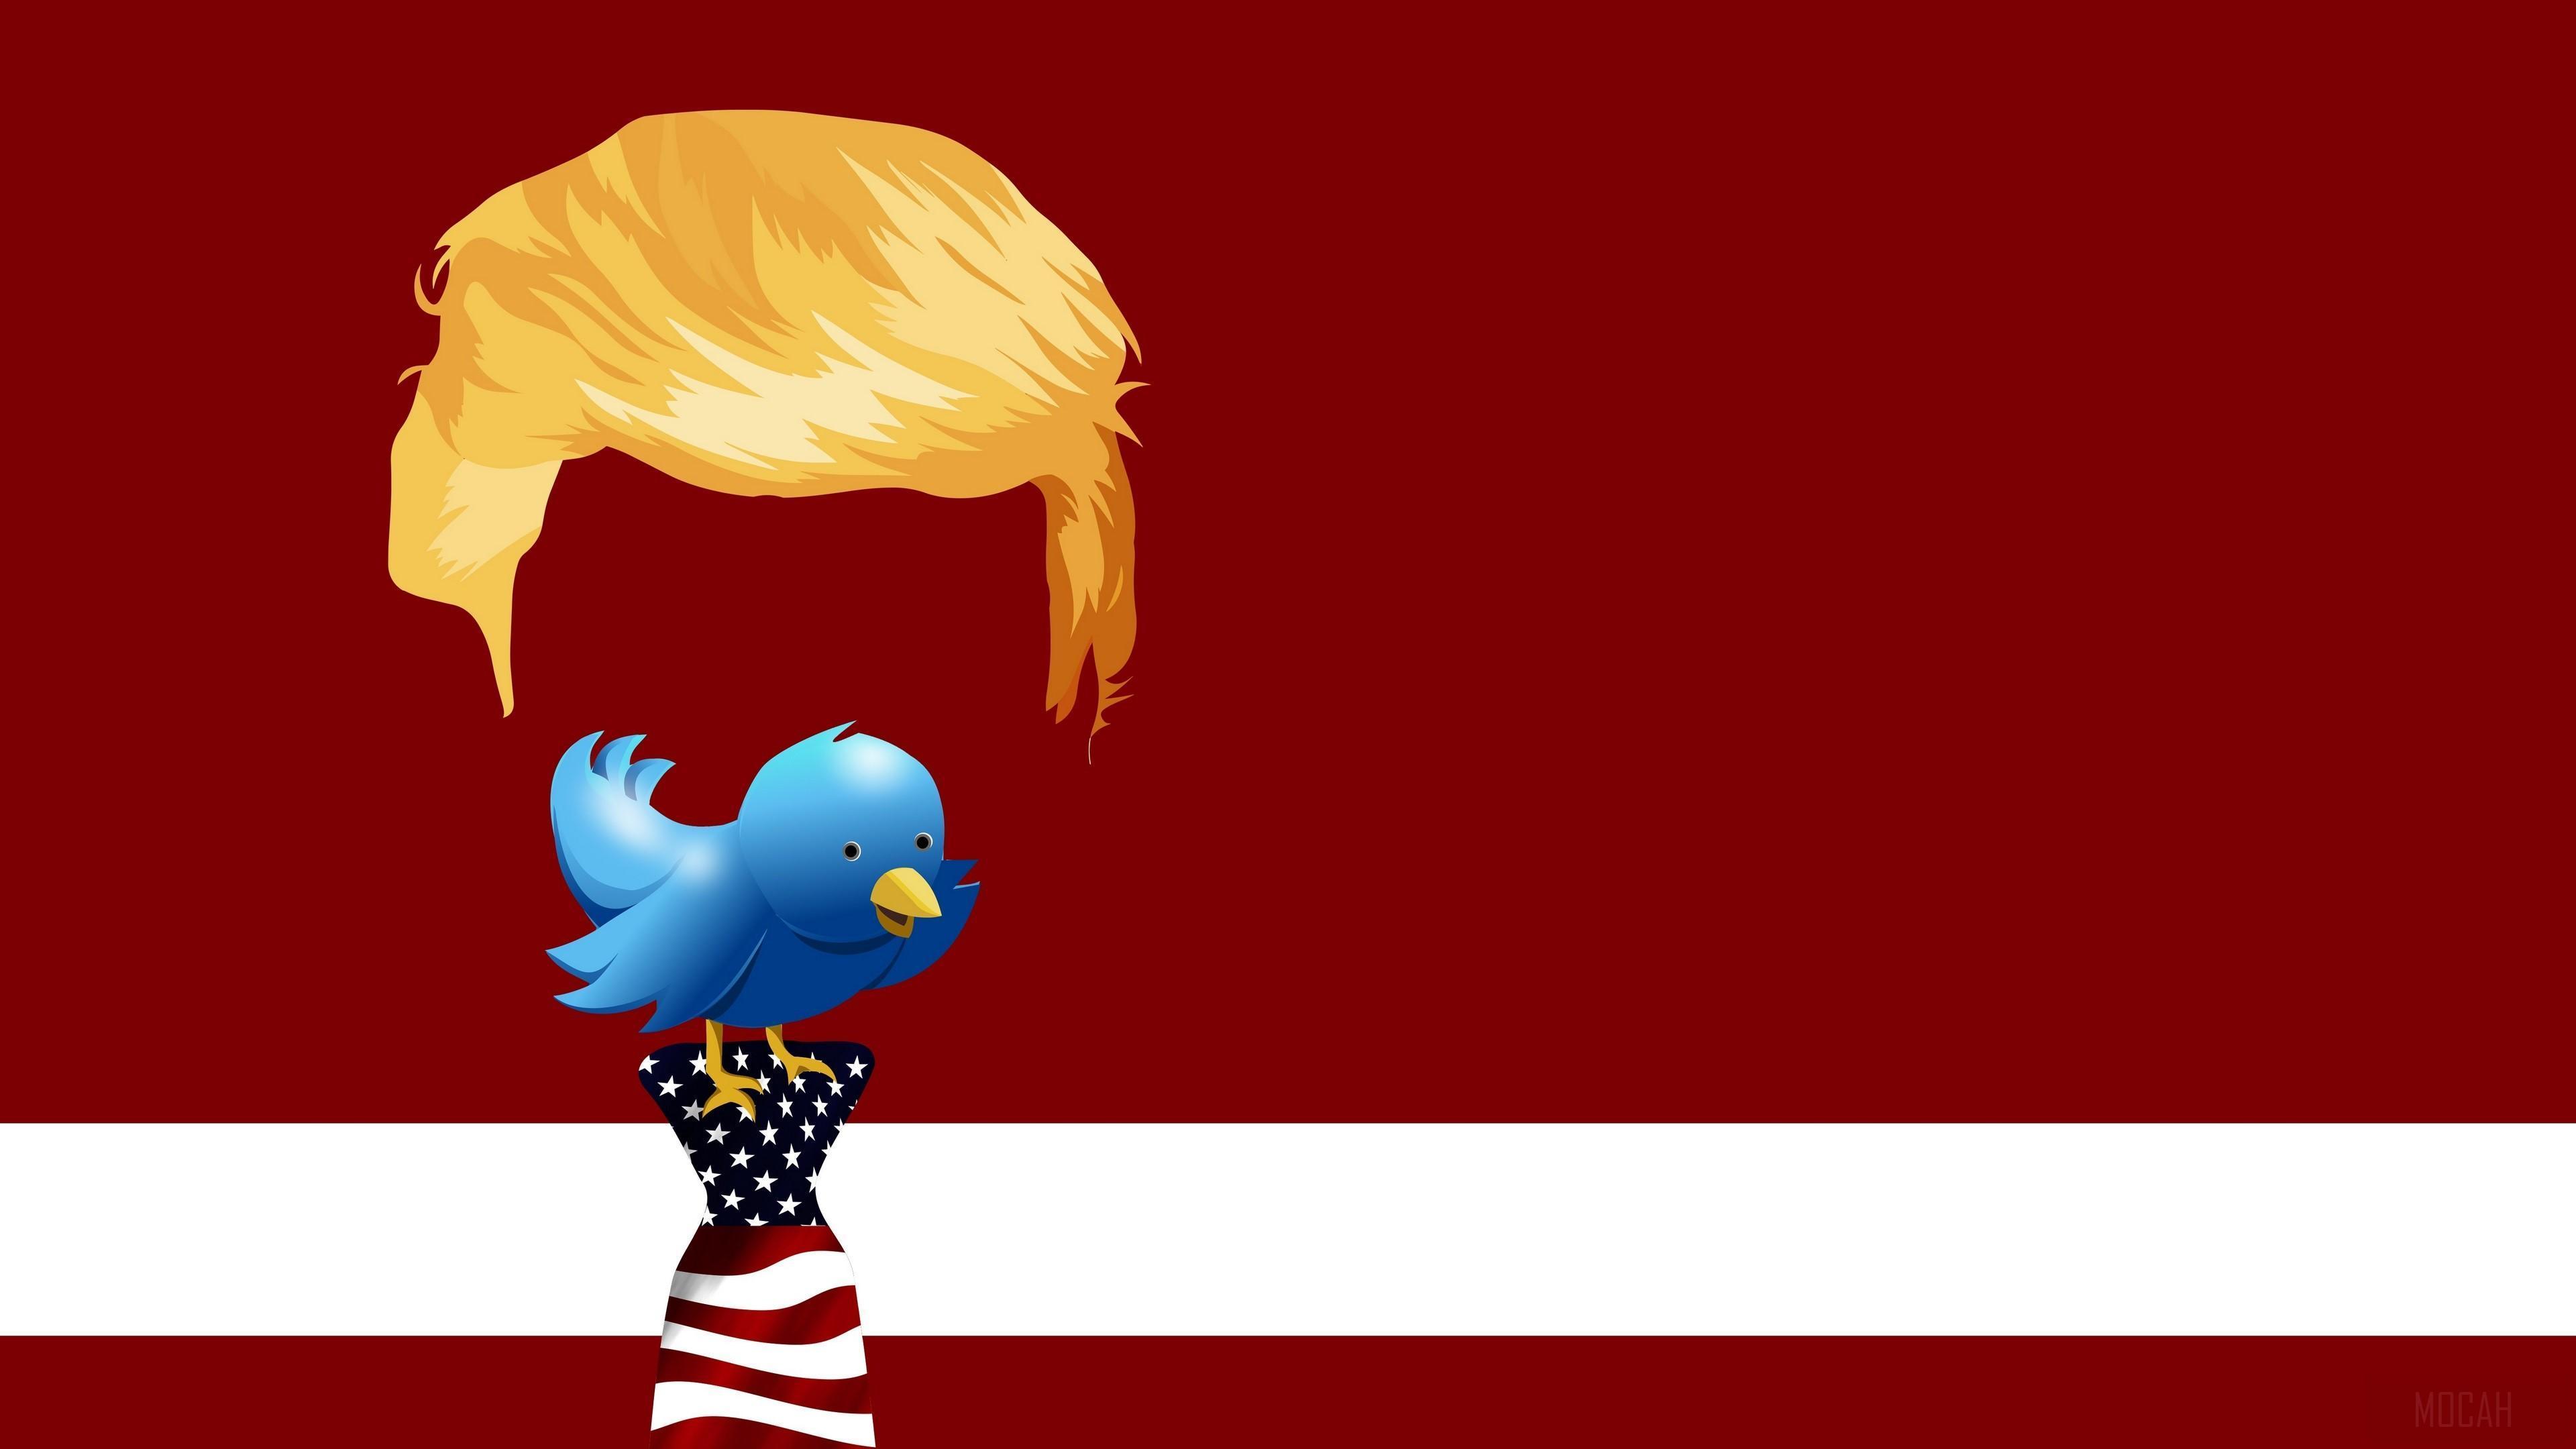 HD wallpaper, Twitter 4K, Donald Trump, Artistic, American, Humor, Tie